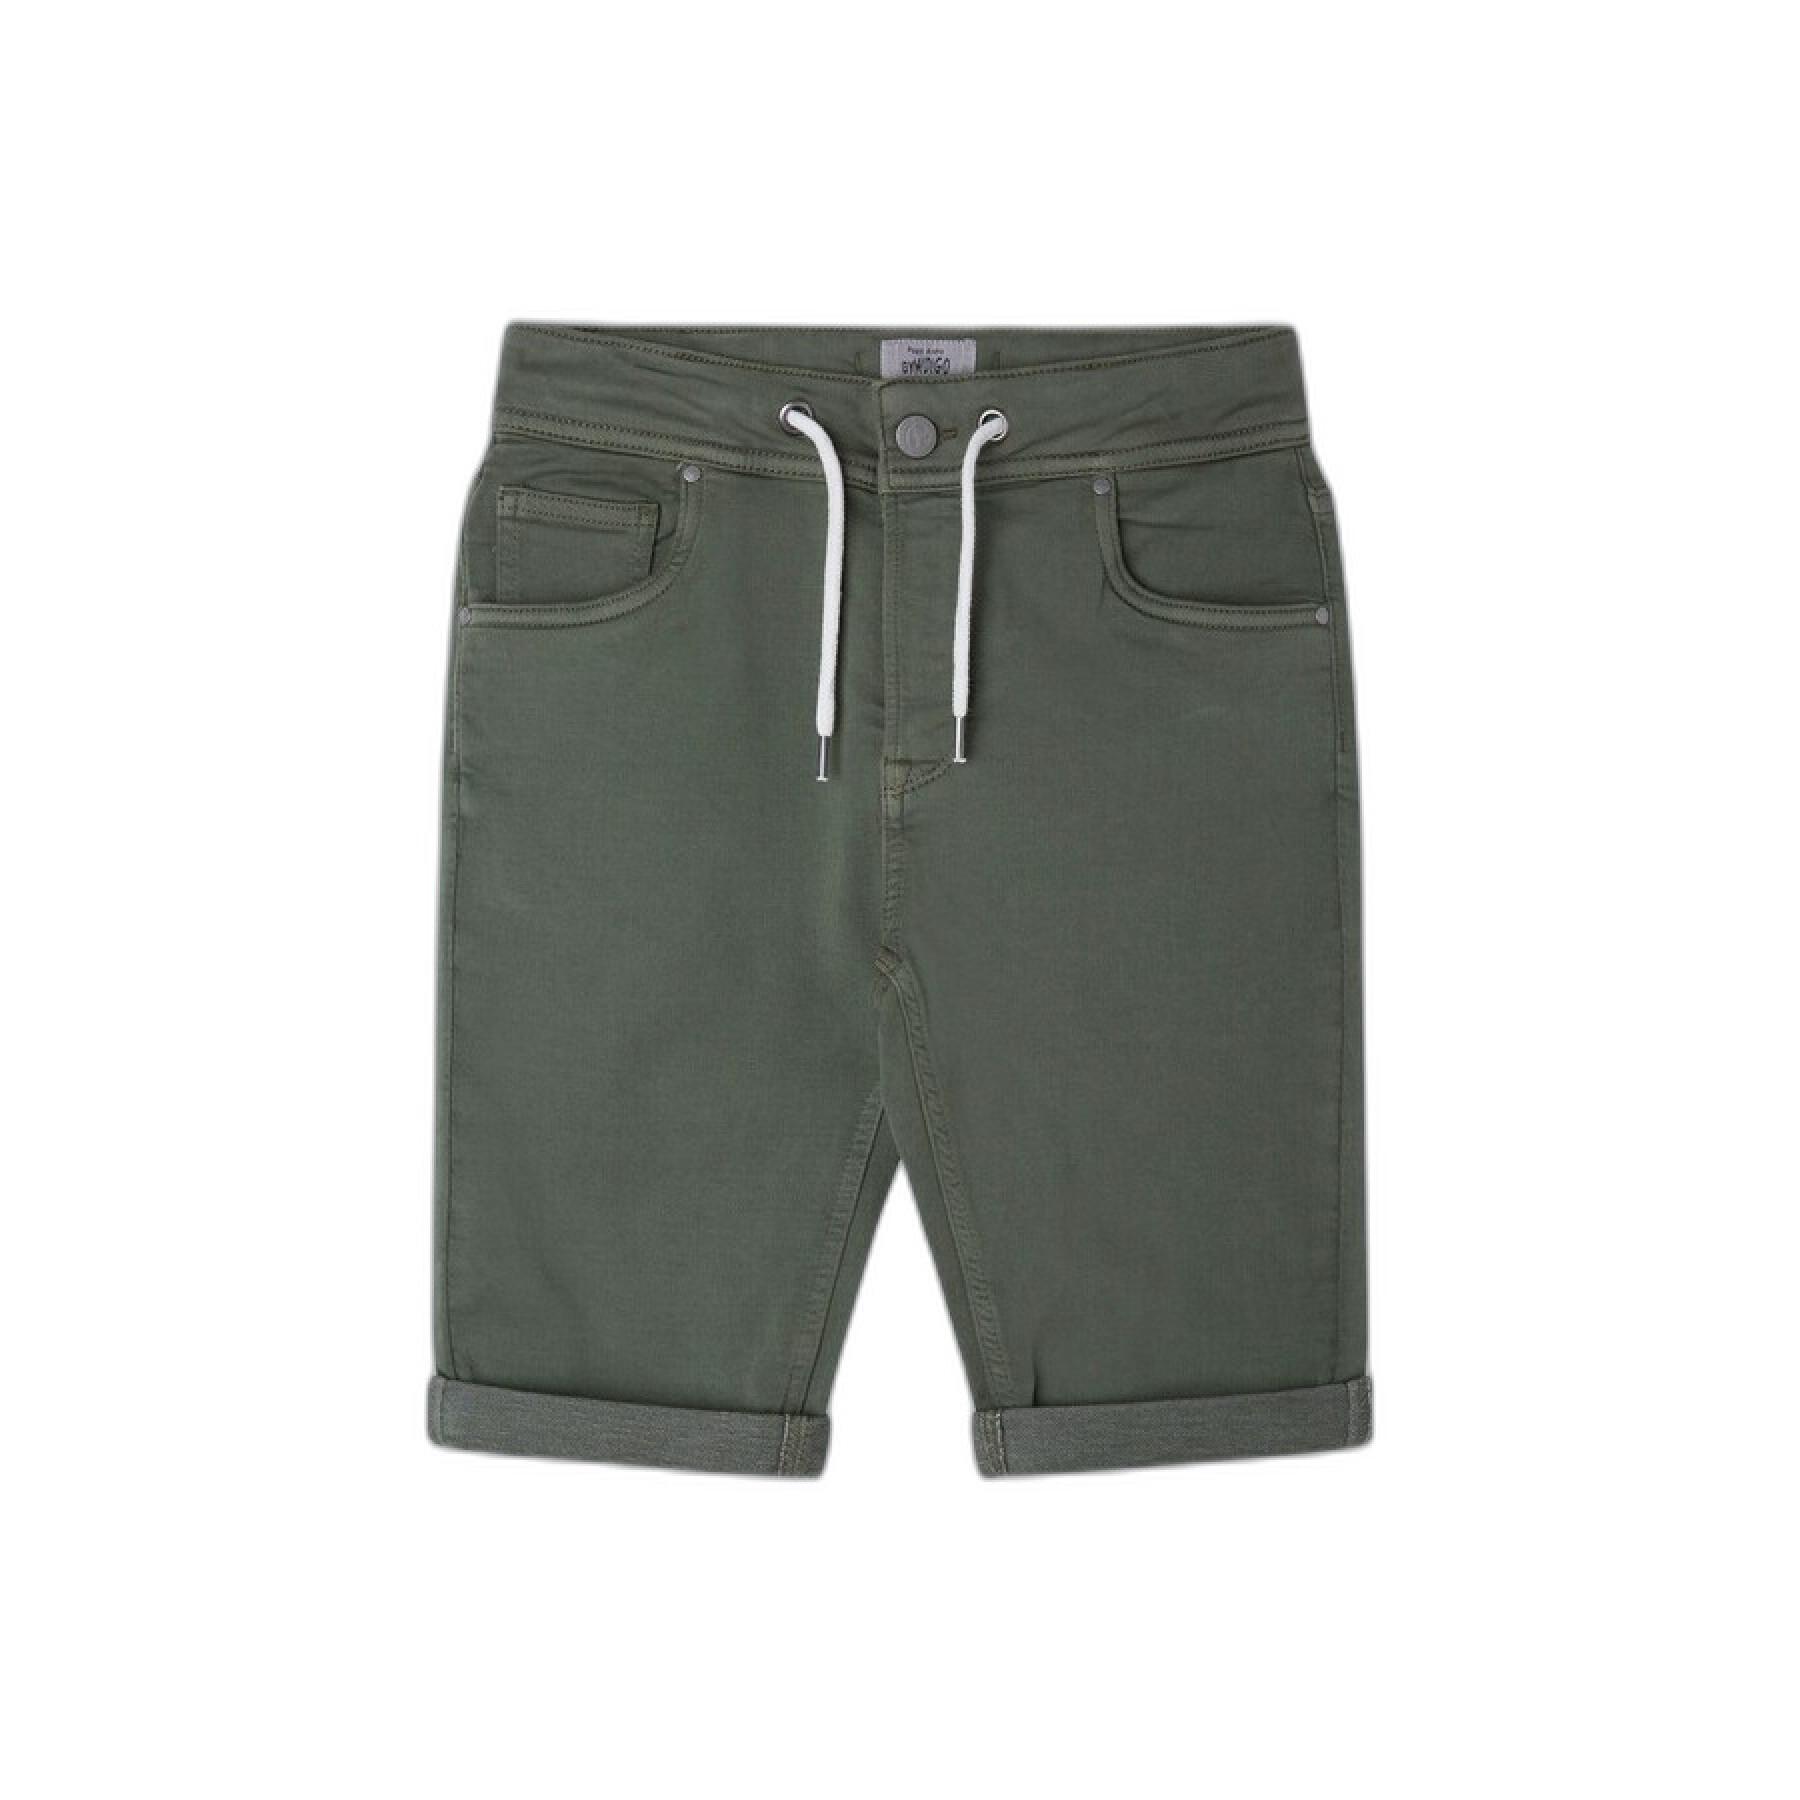 Bermuda shorts for children Pepe Jeans Joe